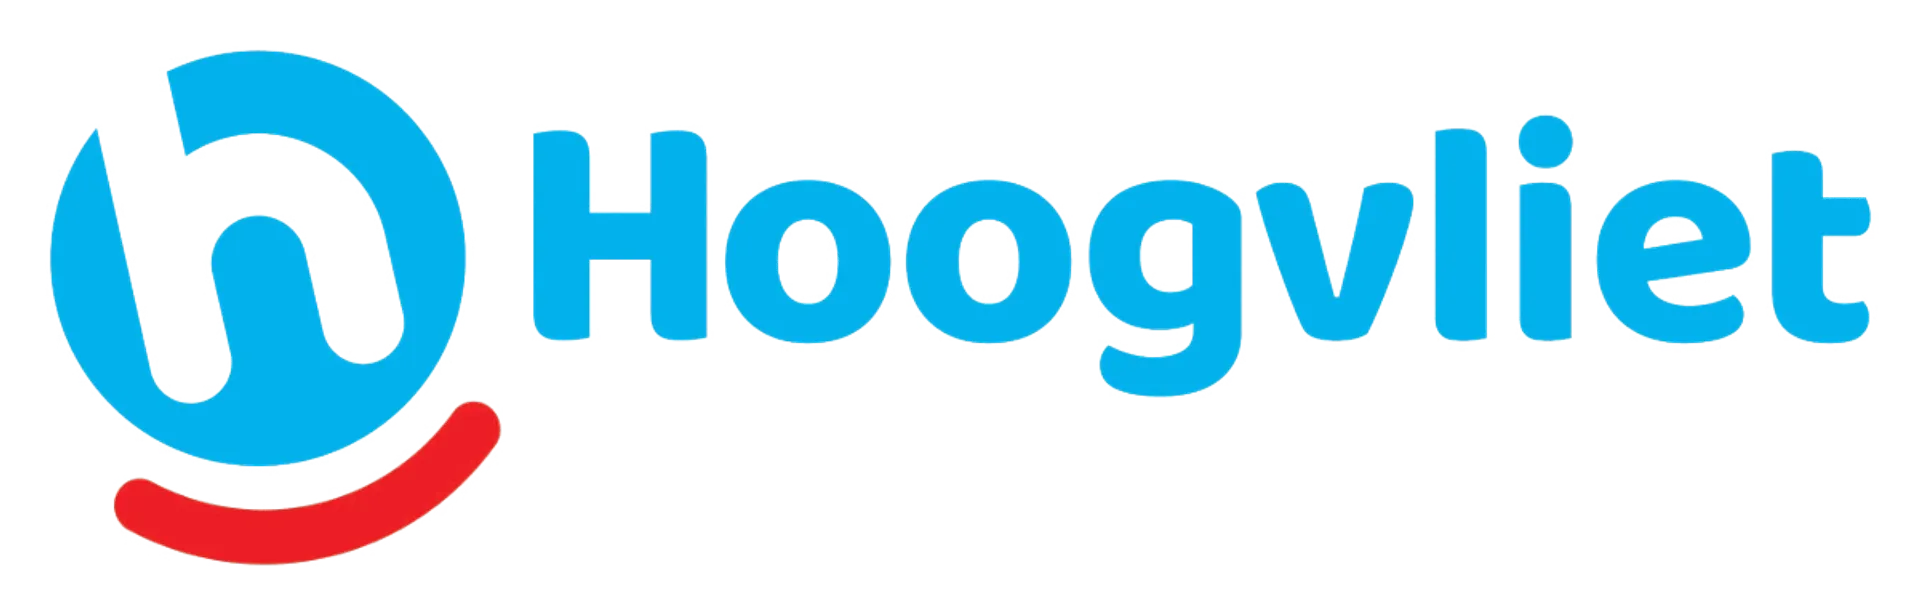 HOOGVLIET logo